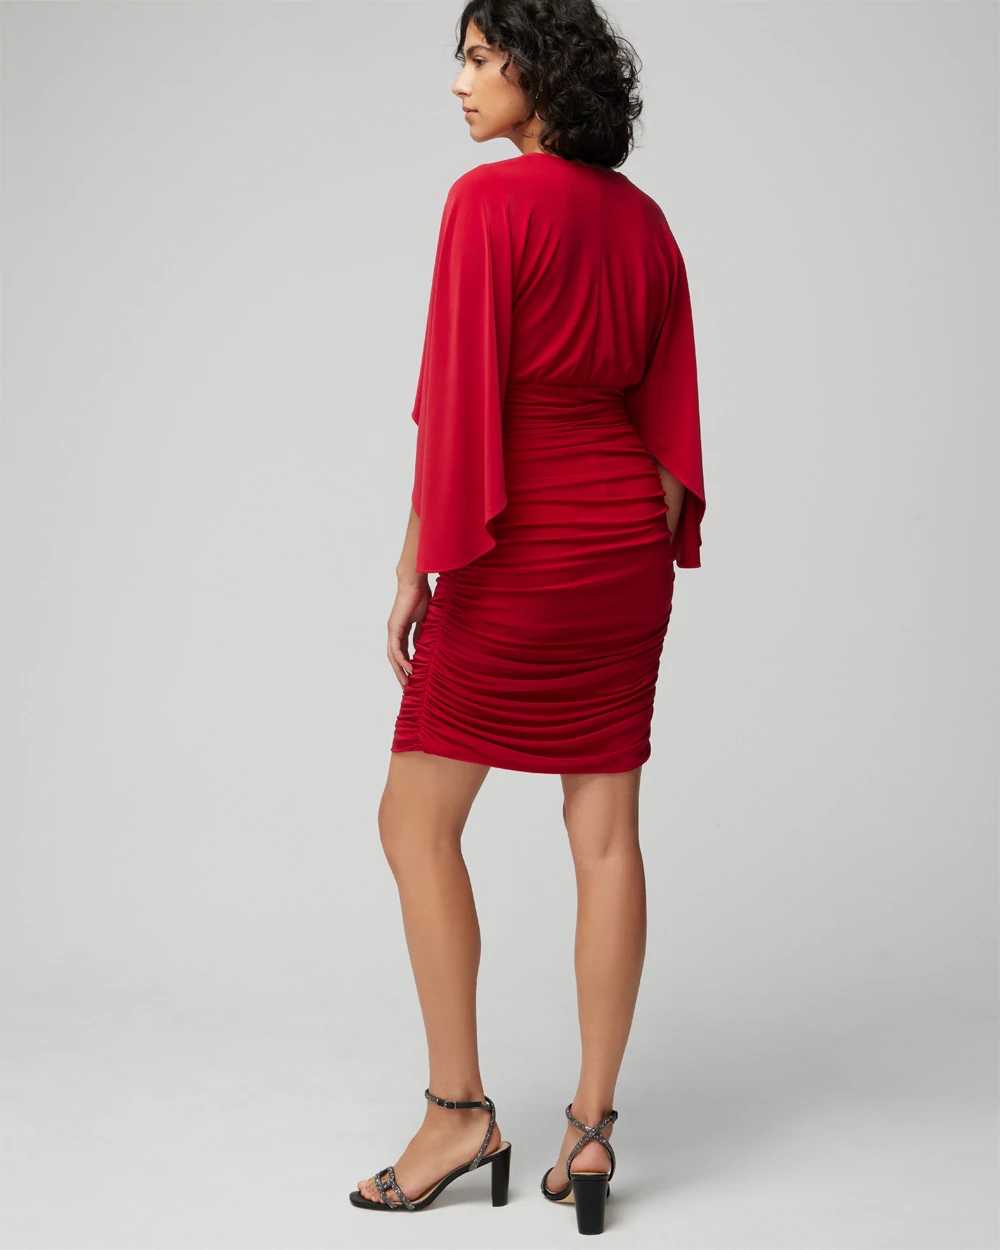 3/4 Flutter Sleeve Matte Jersey Mini Dress click to view larger image.